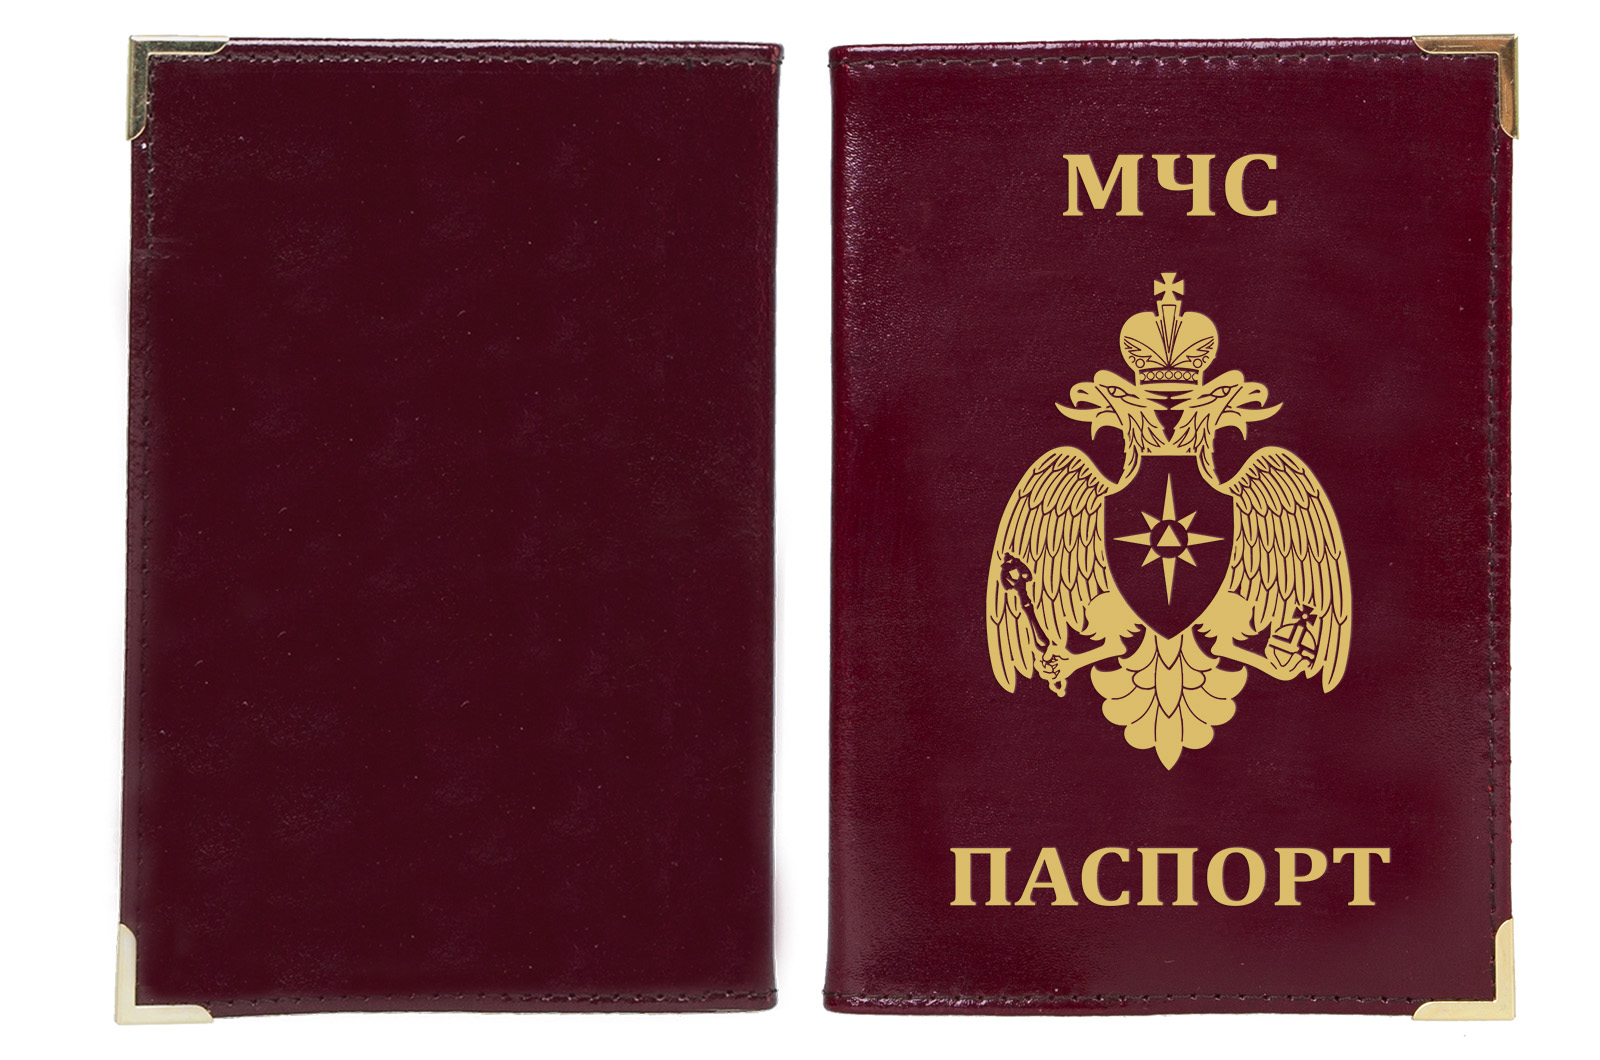 Обложка на паспорт с тиснением эмблемы МЧС 